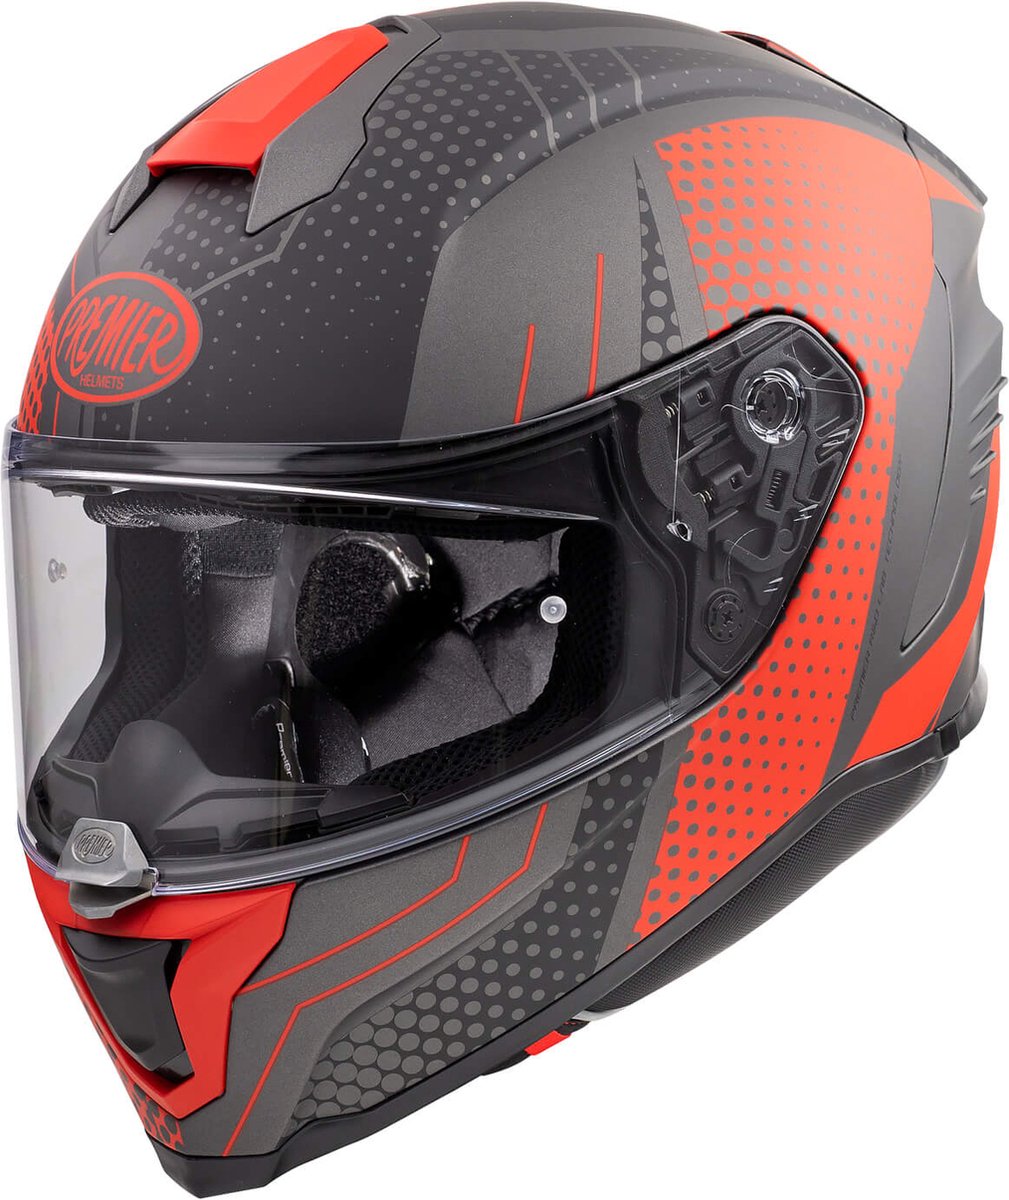 Premier Hyper Bp 92 Bm Helmet XL - Maat XL - Helm